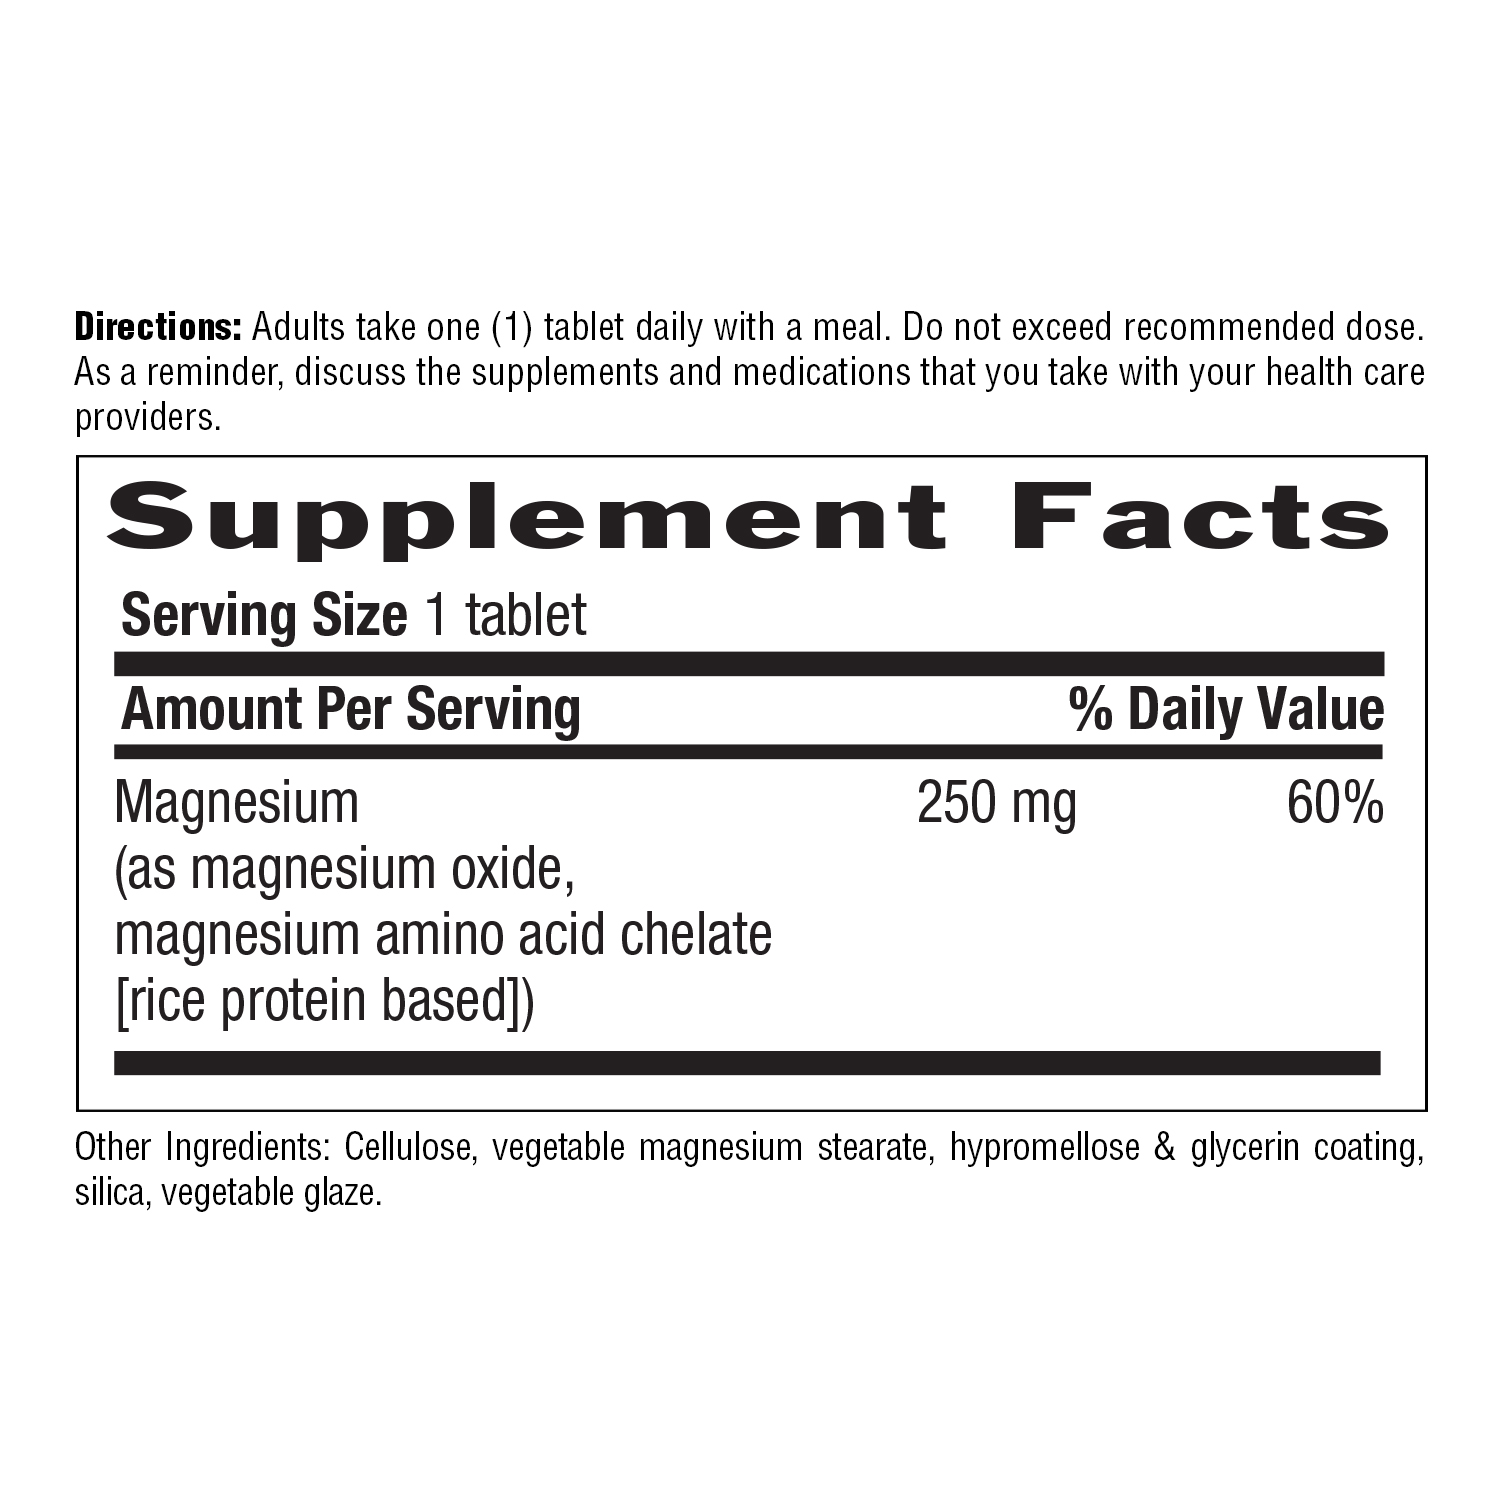 Chelated Magnesium 250 mg